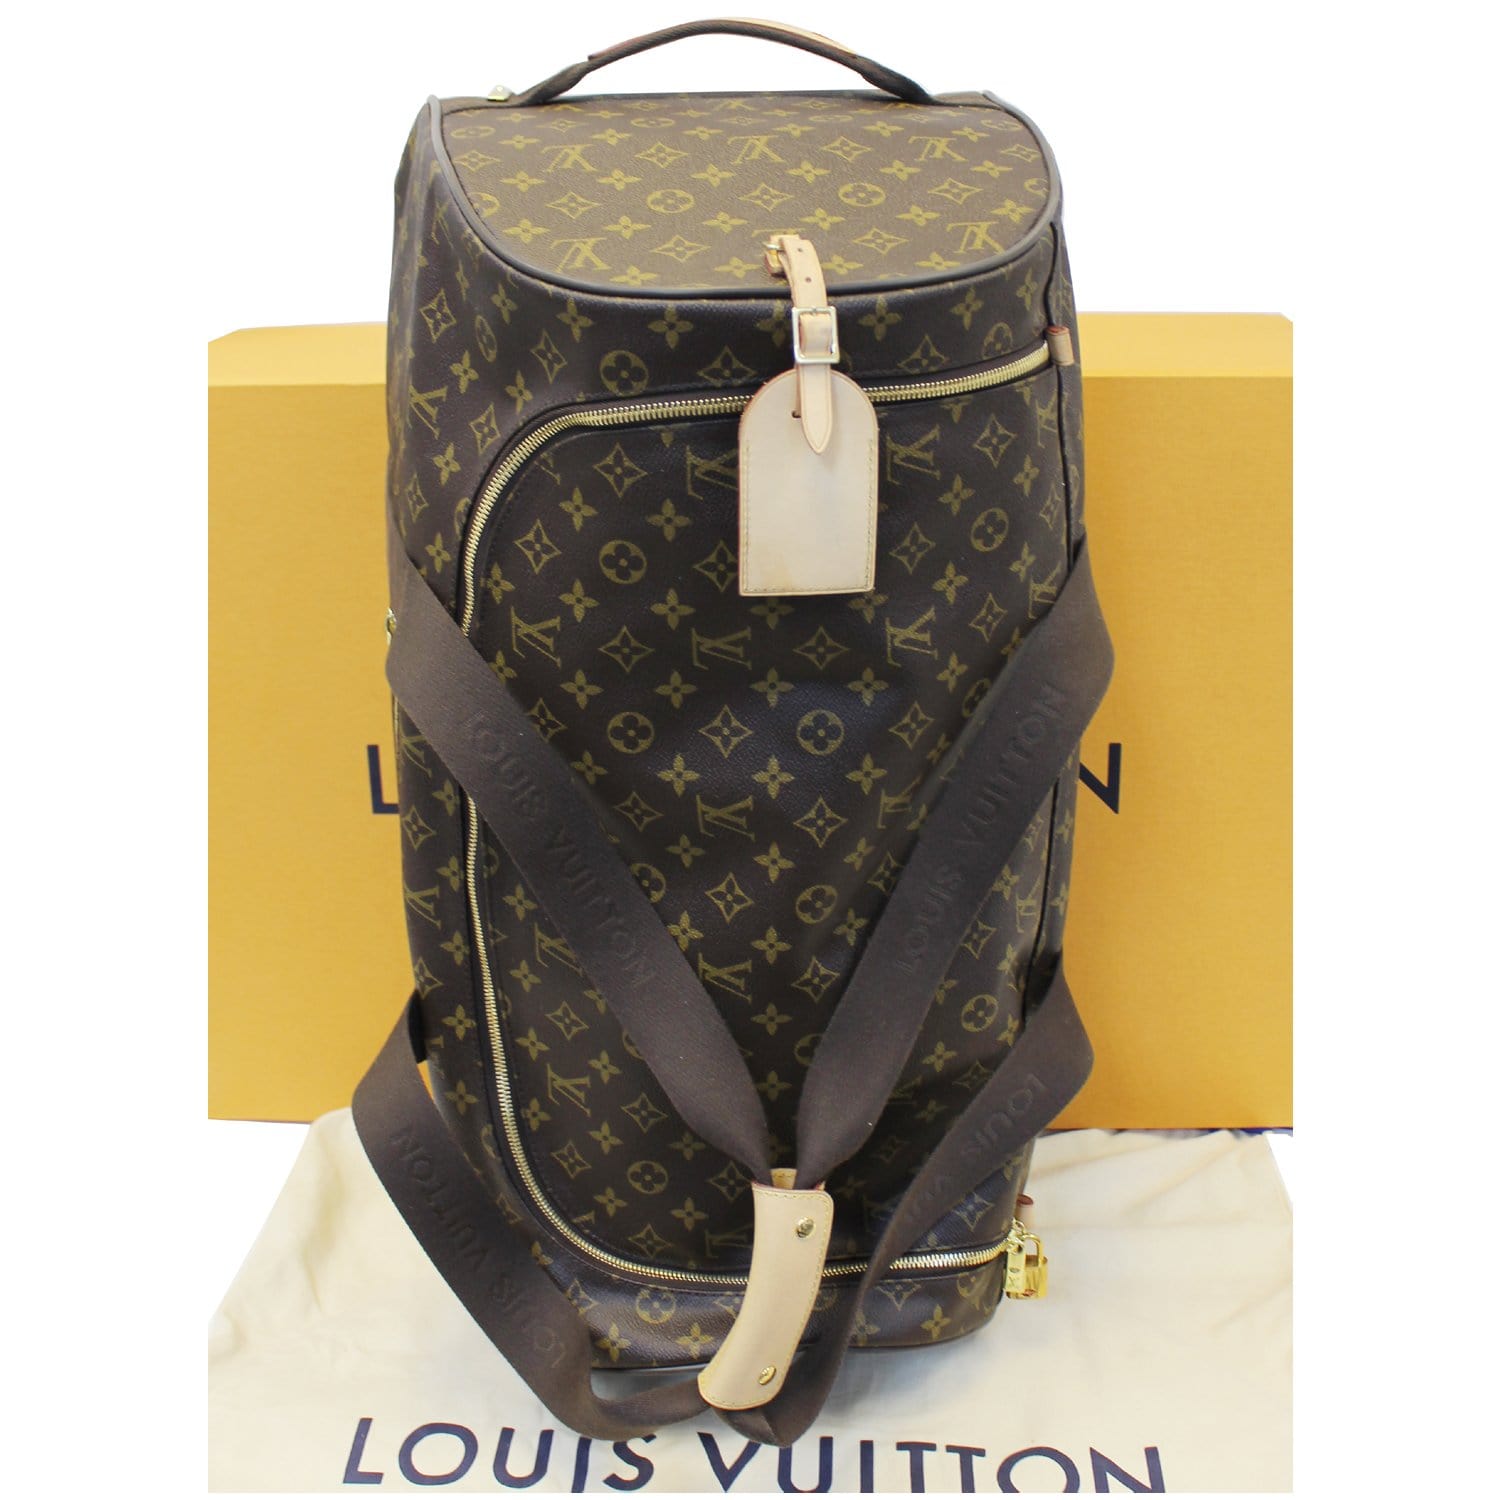 Louis Vuitton Vintage Expandable XL Rolling Luggage Duffle 